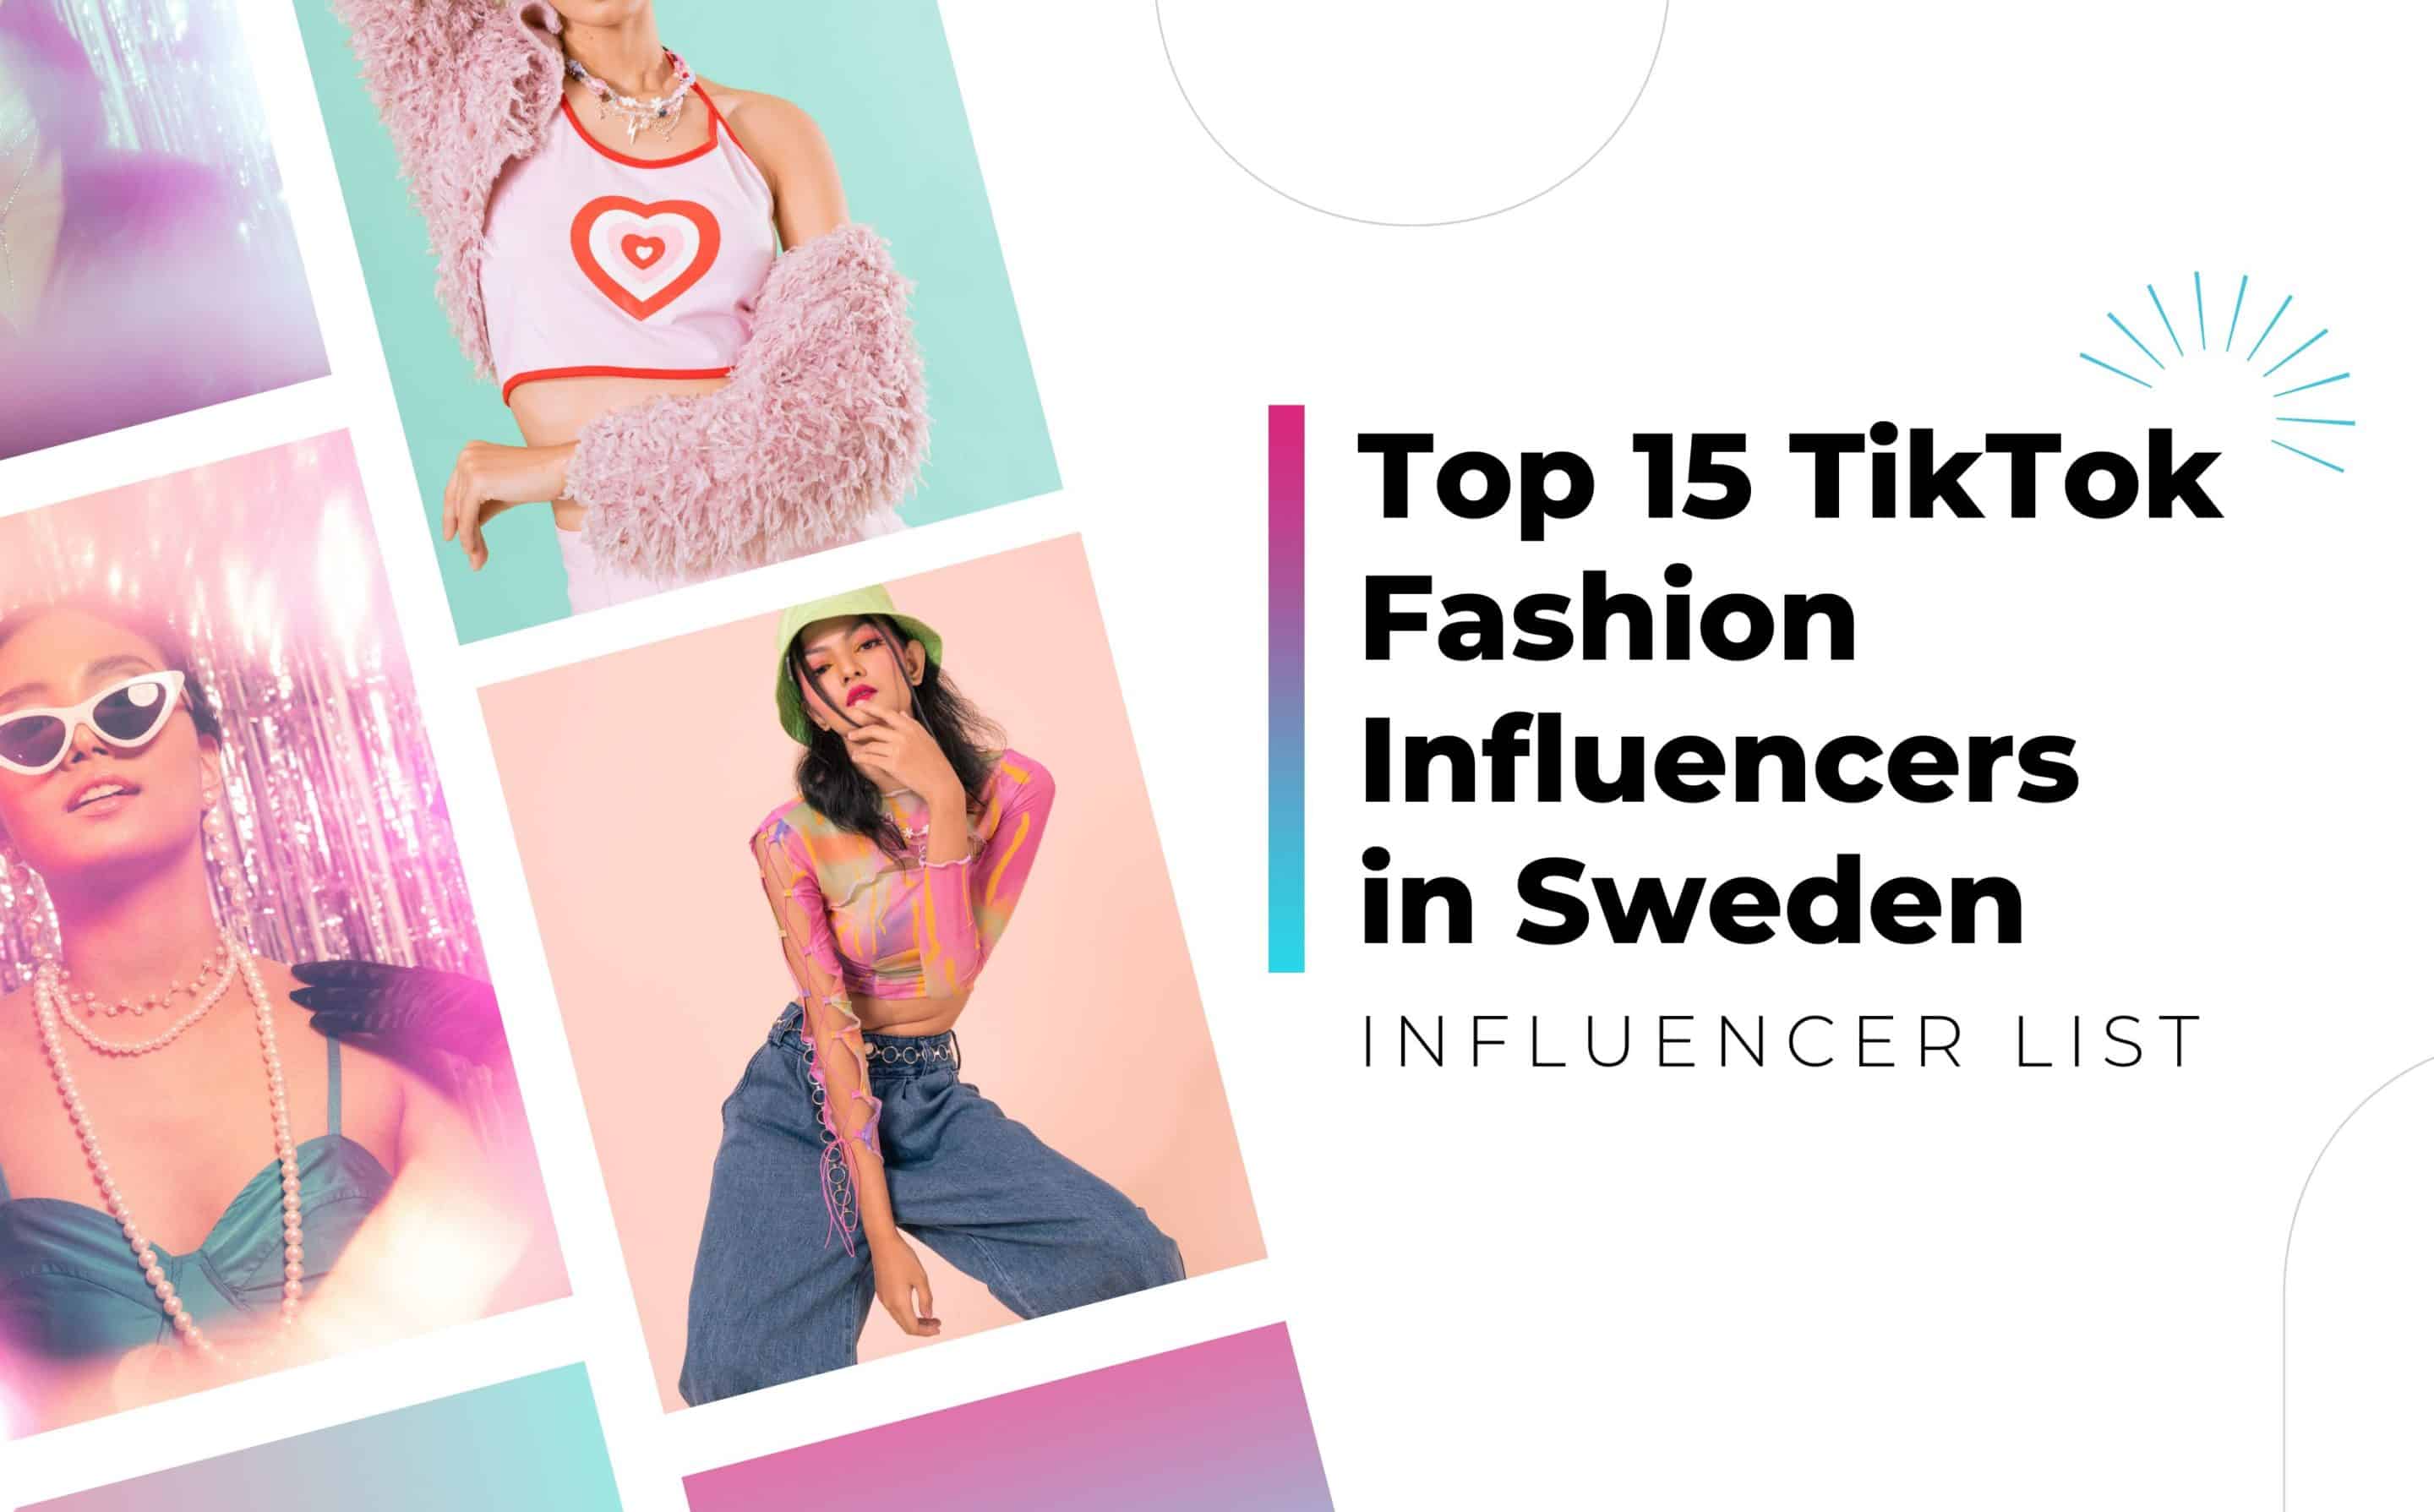 Swedish fashion influencers to know